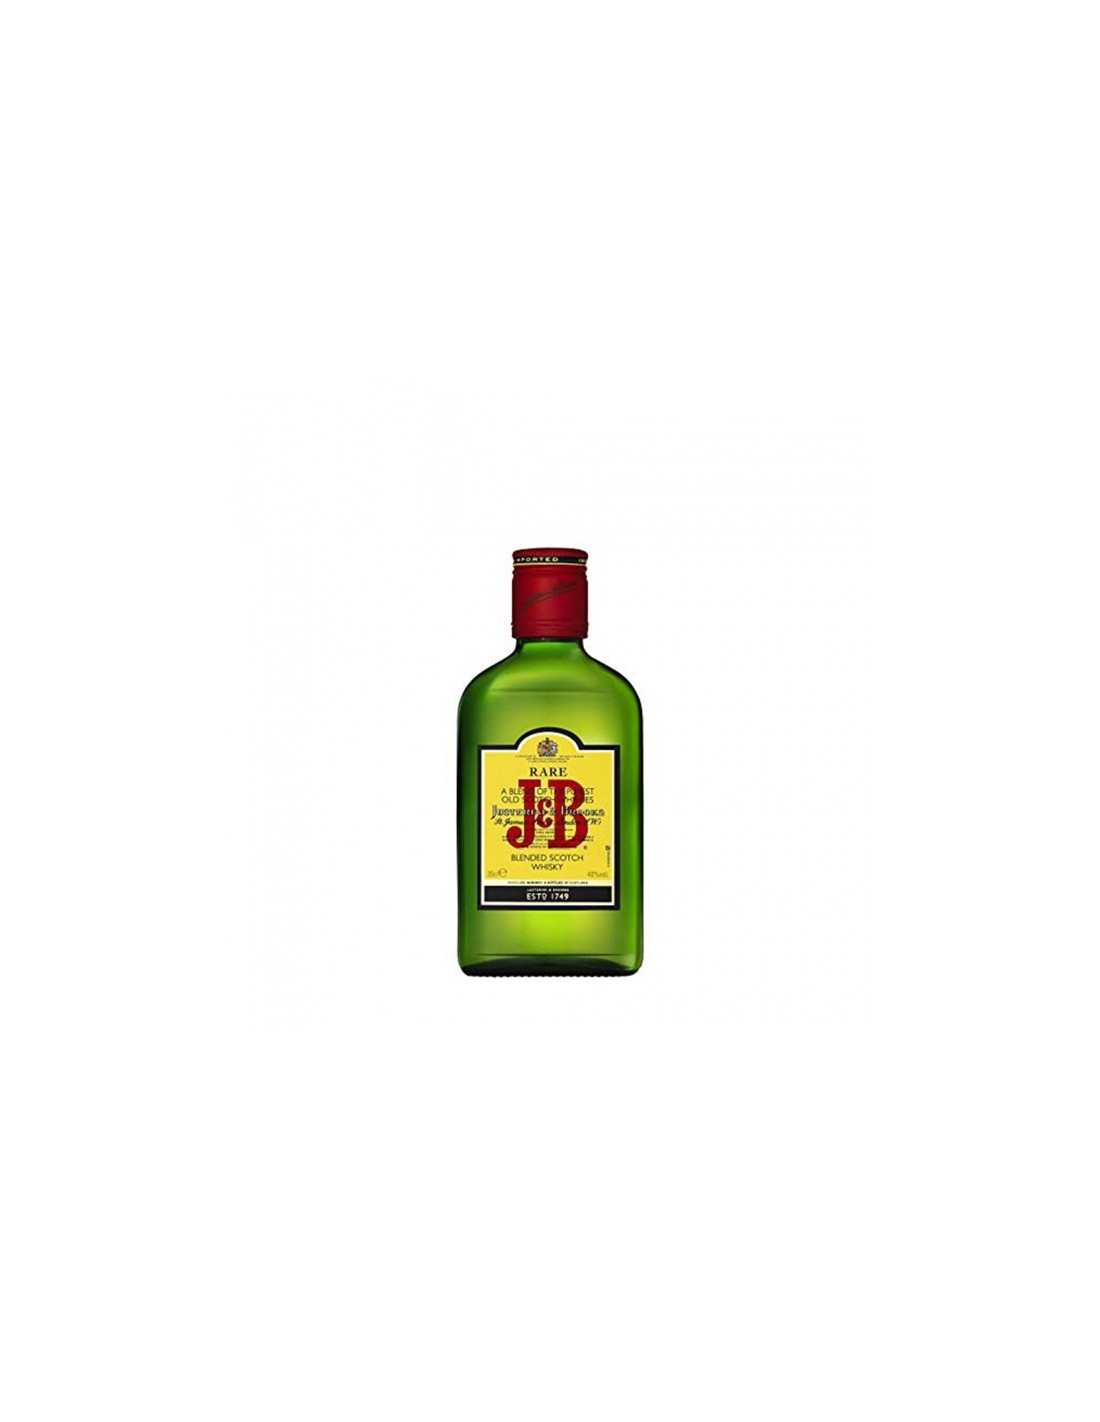 Whisky J&B, 40% alc., 0.2L, Scotia